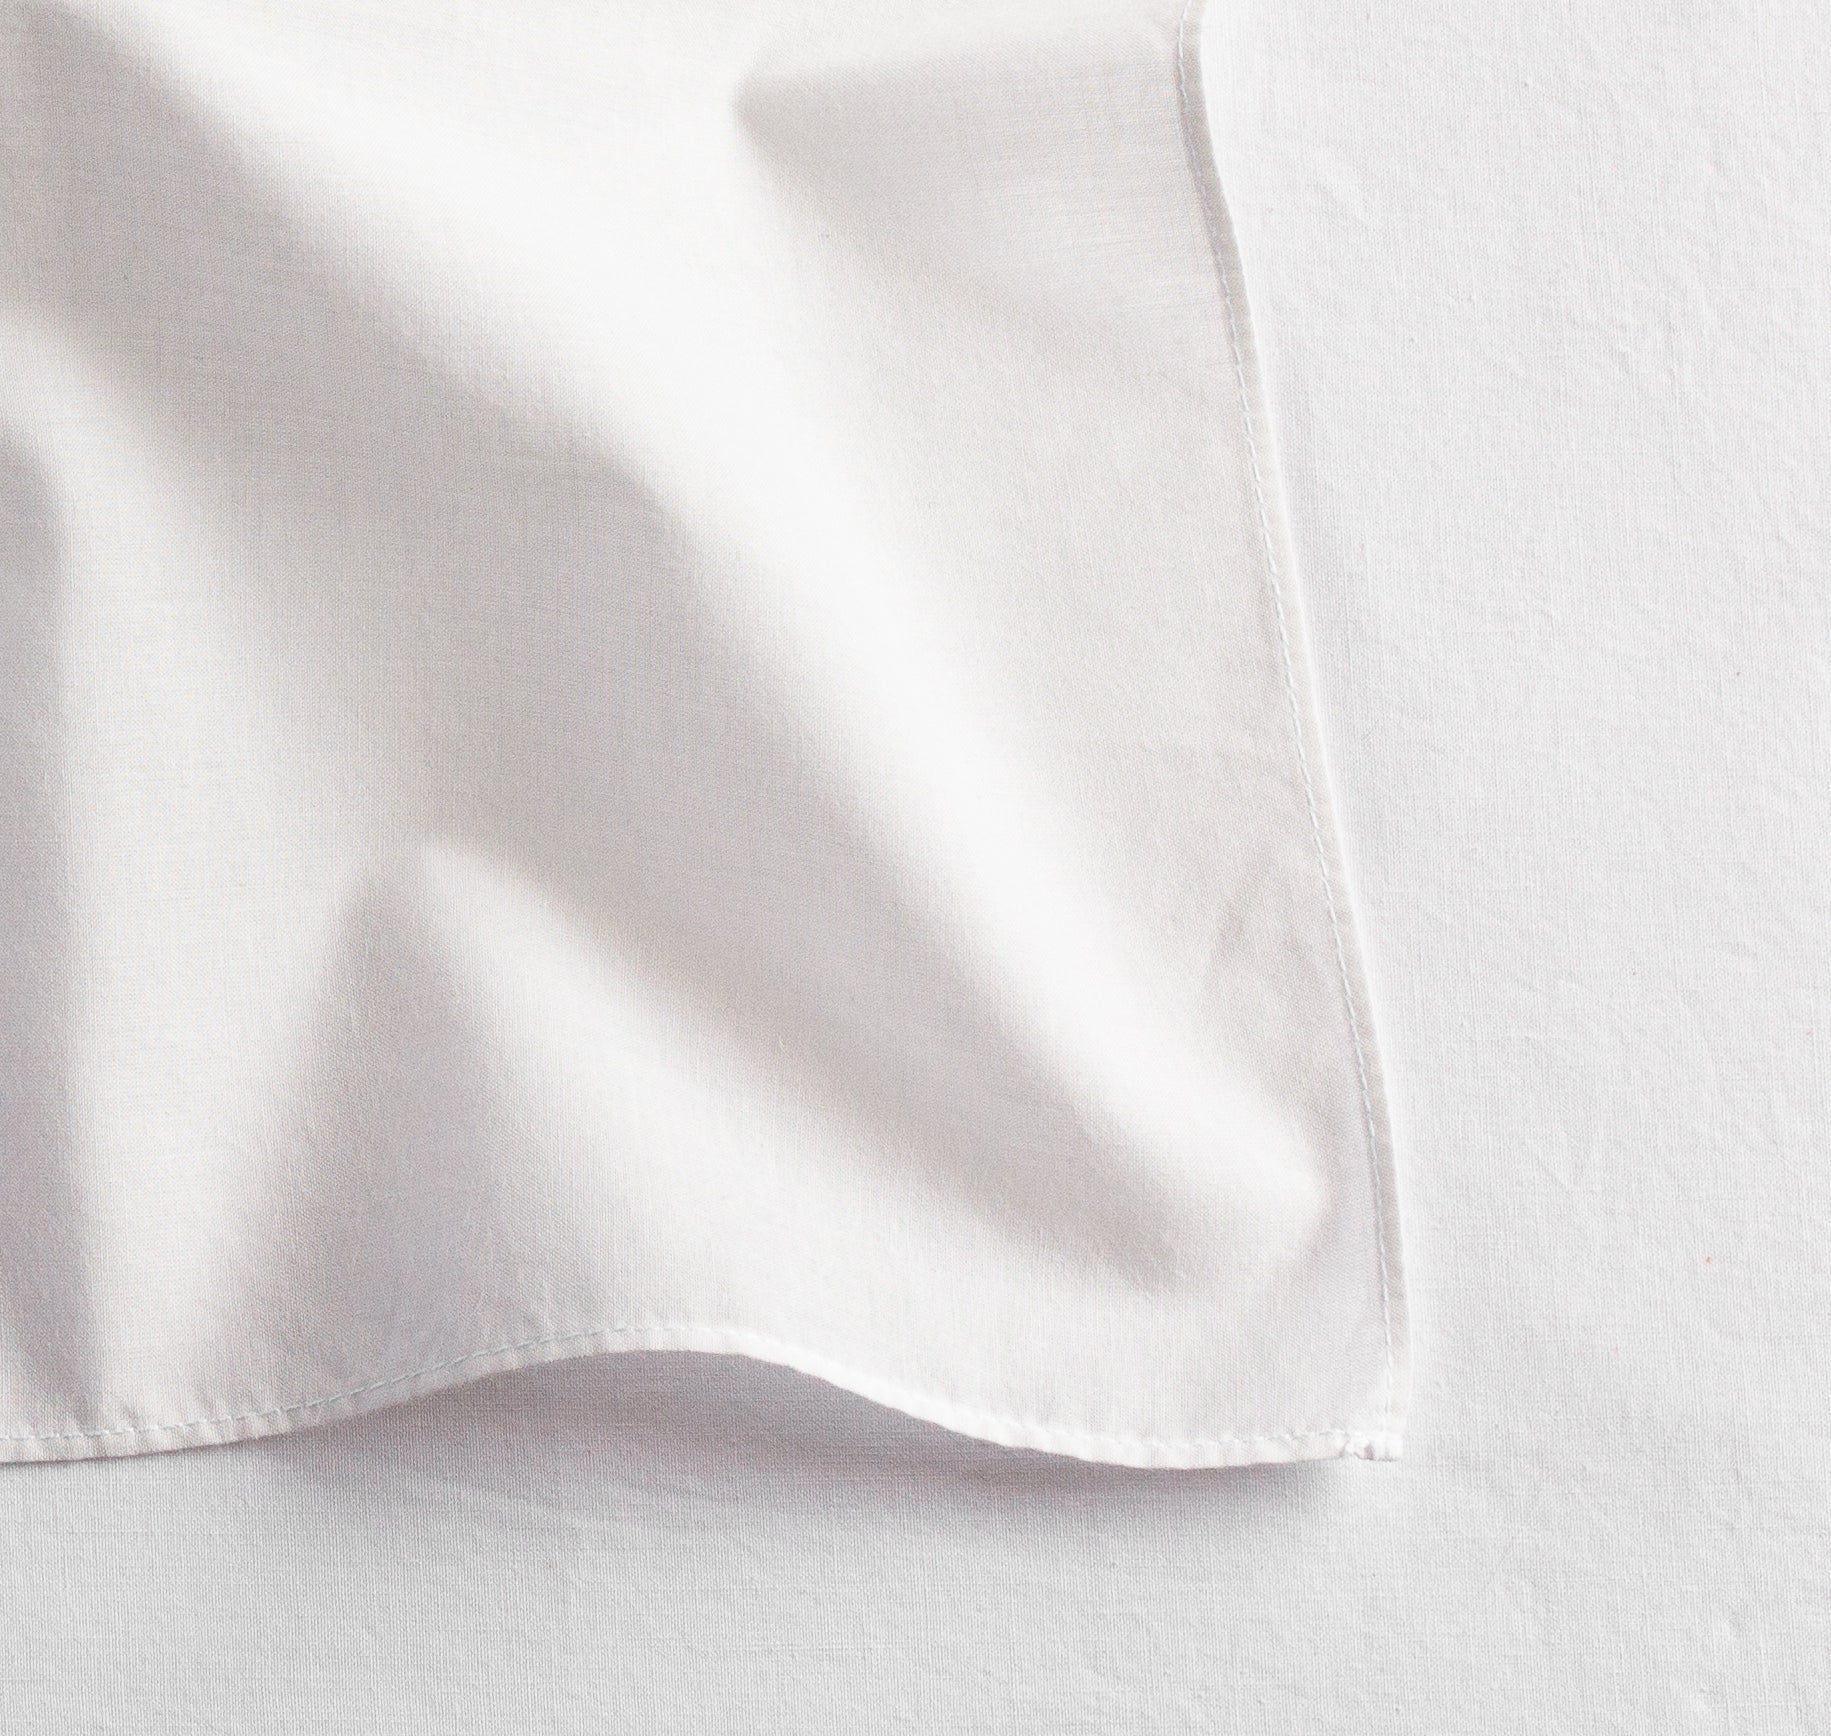 Mouchoir en tissu blanc fabriqué en France Mouchoir tissu rhume